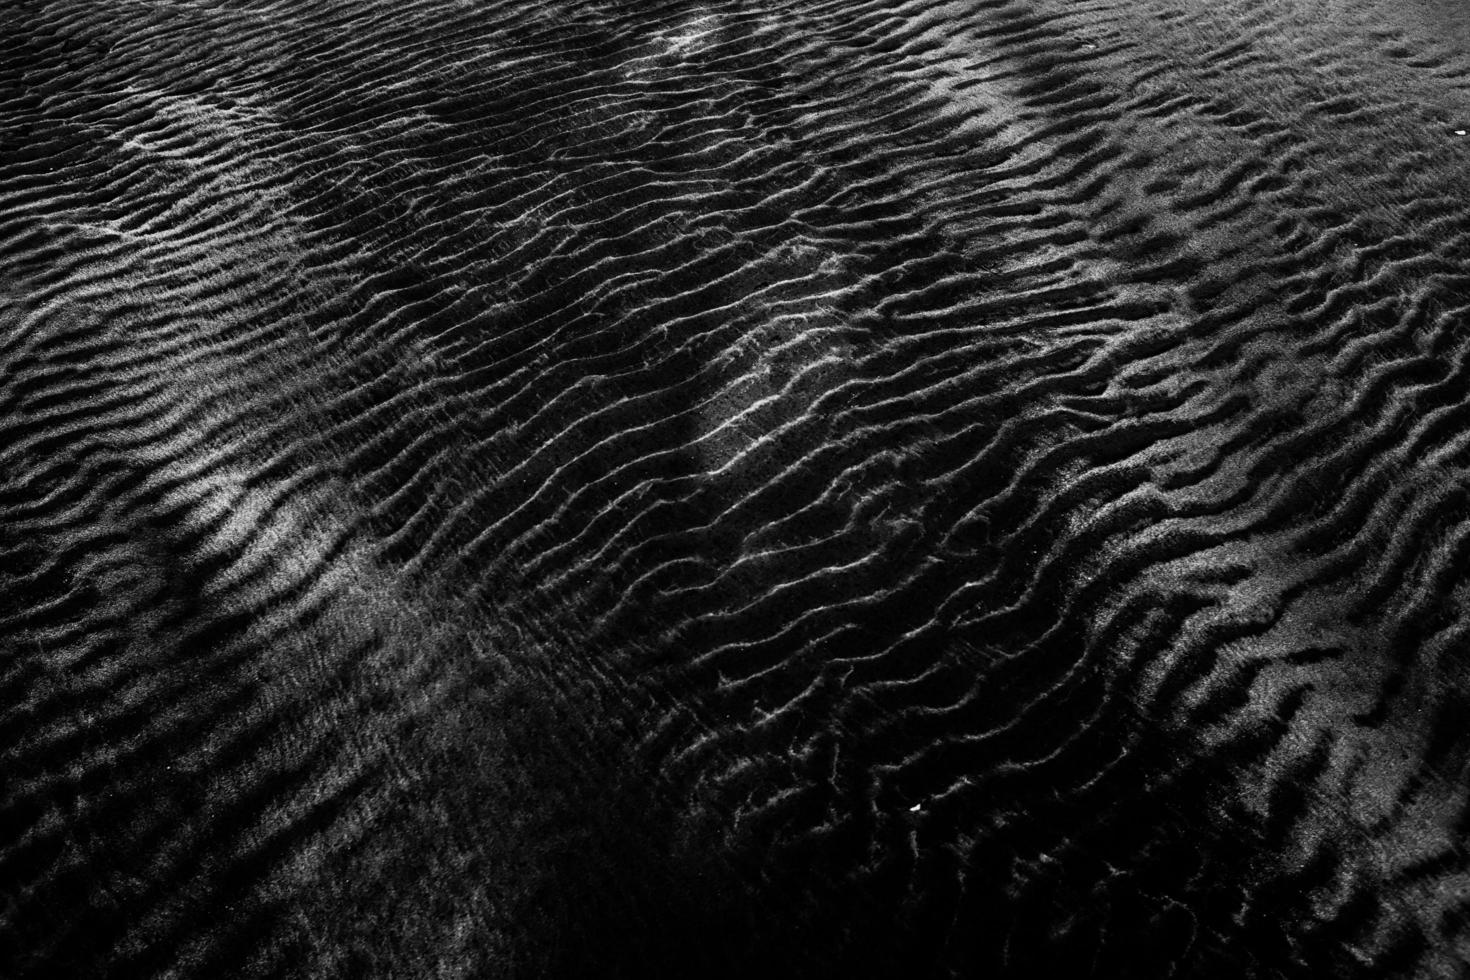 Black and white photo of fabric ridges